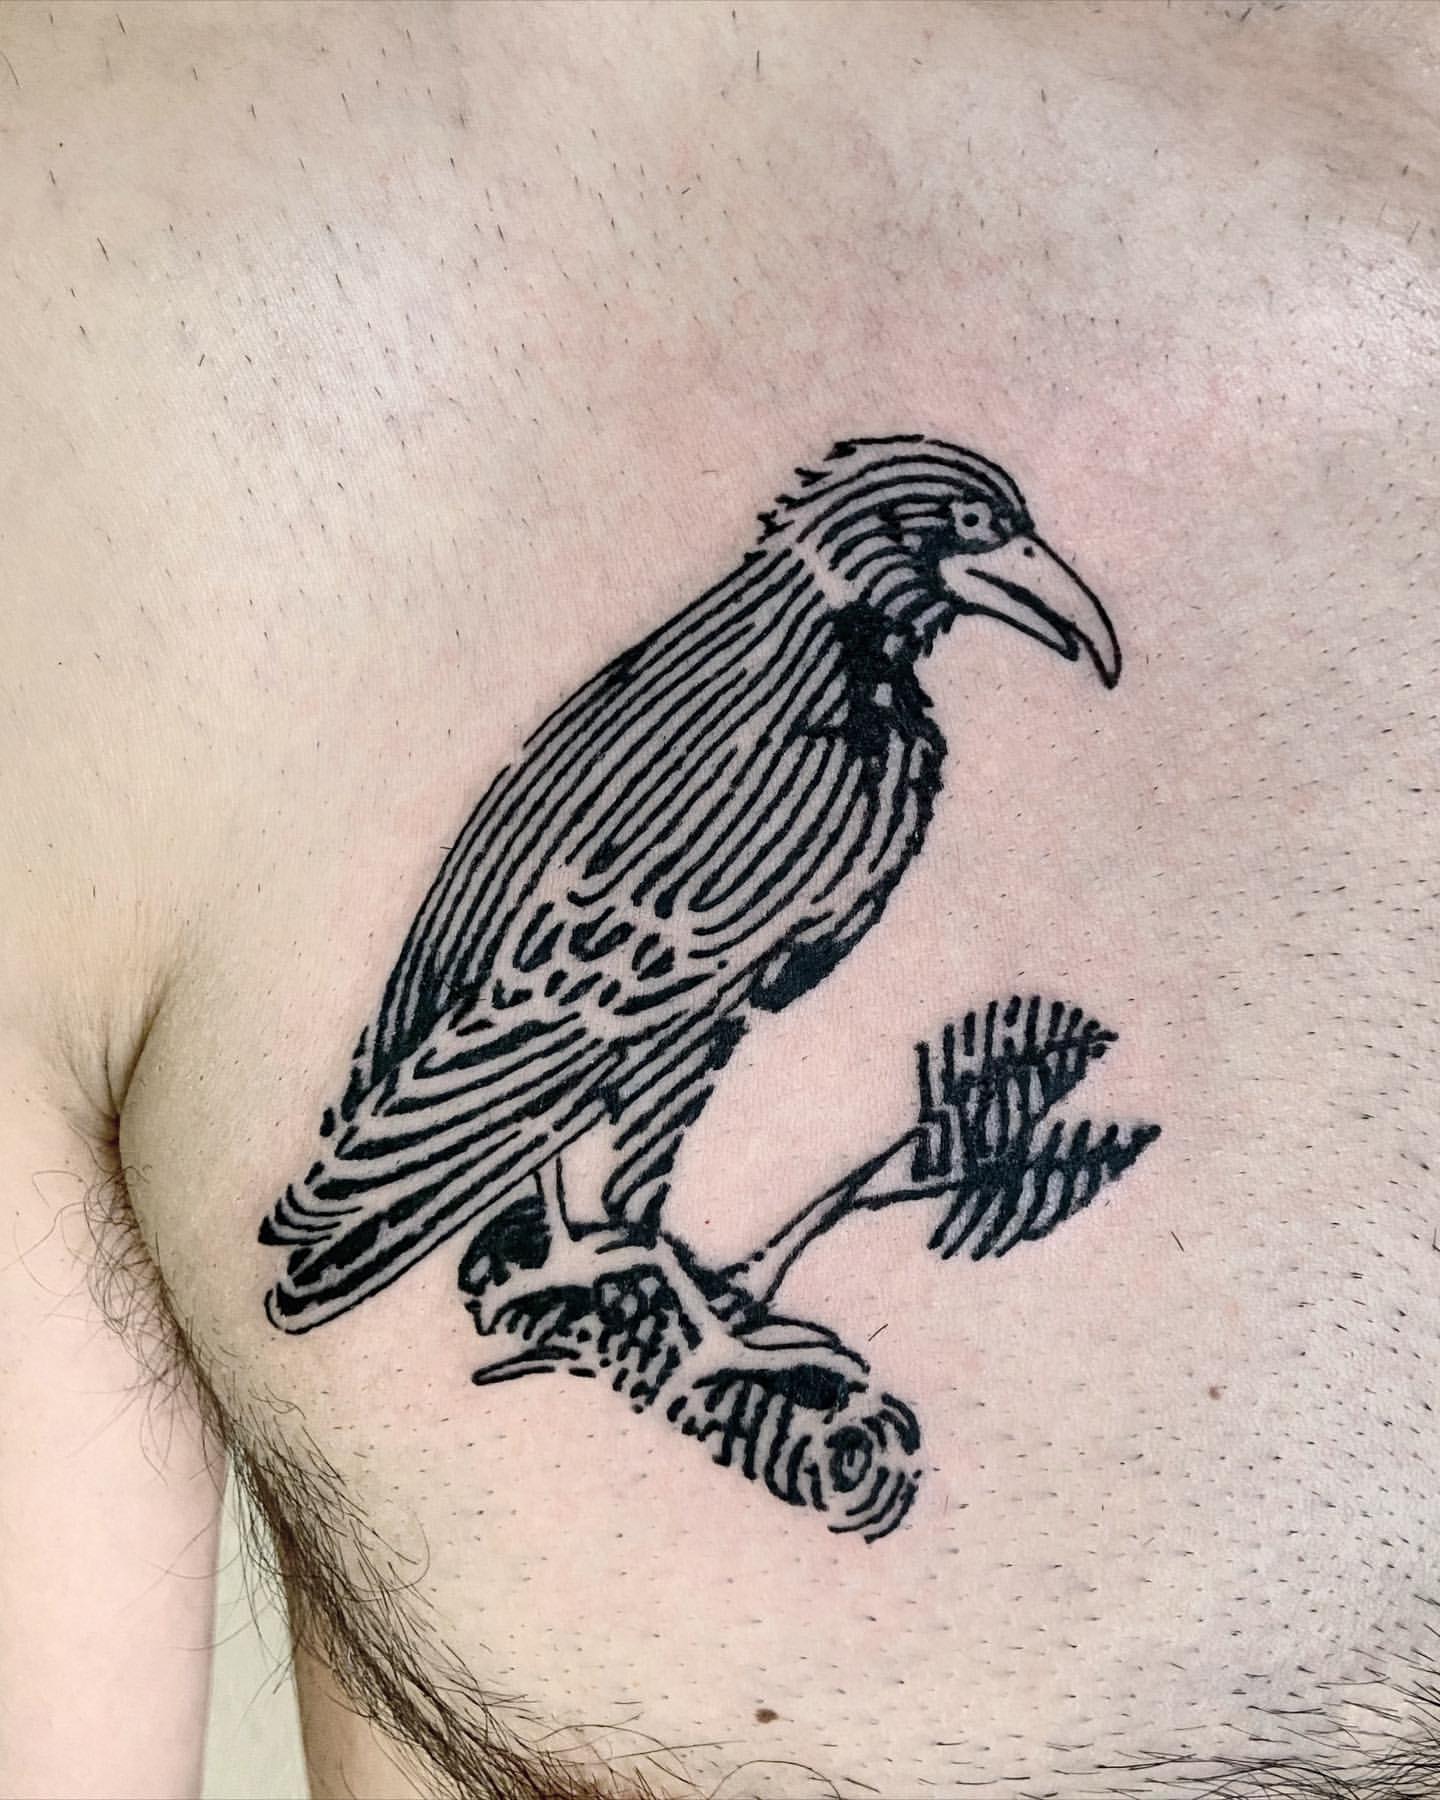 Eagle tattoo located on the head, illustrative style.